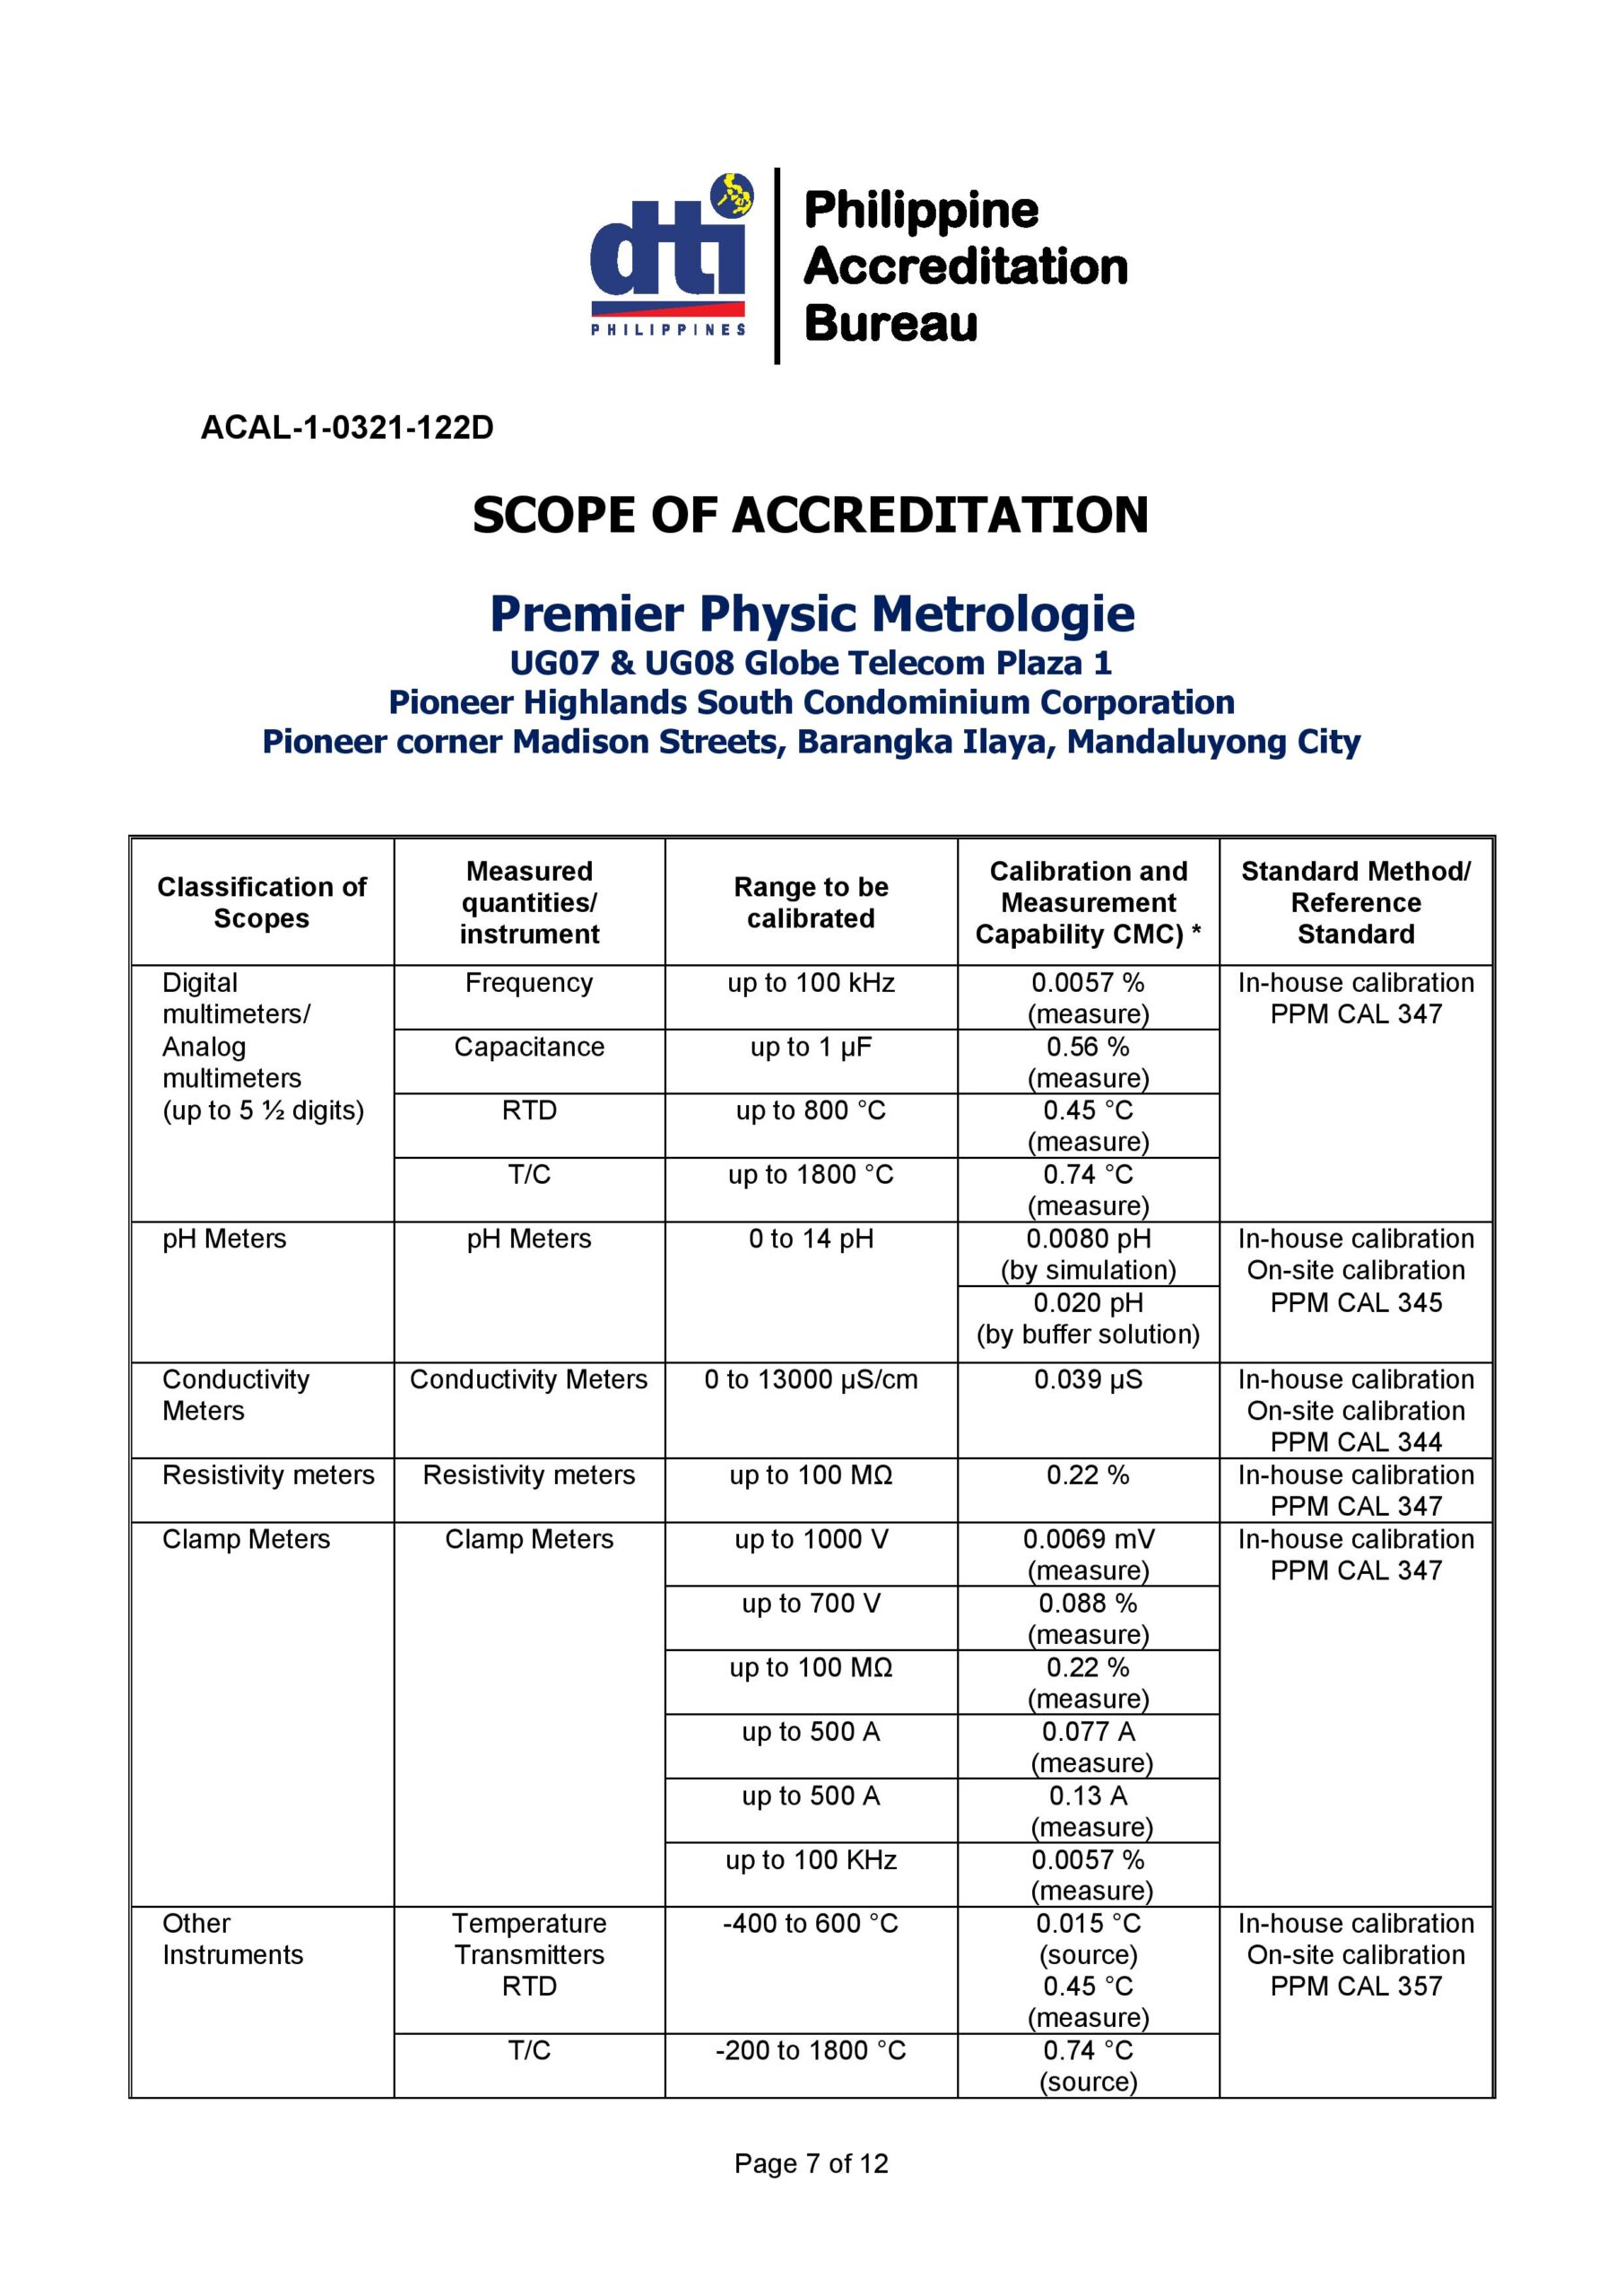 Premier Physic Metrologie - Scope of Accreditation 7